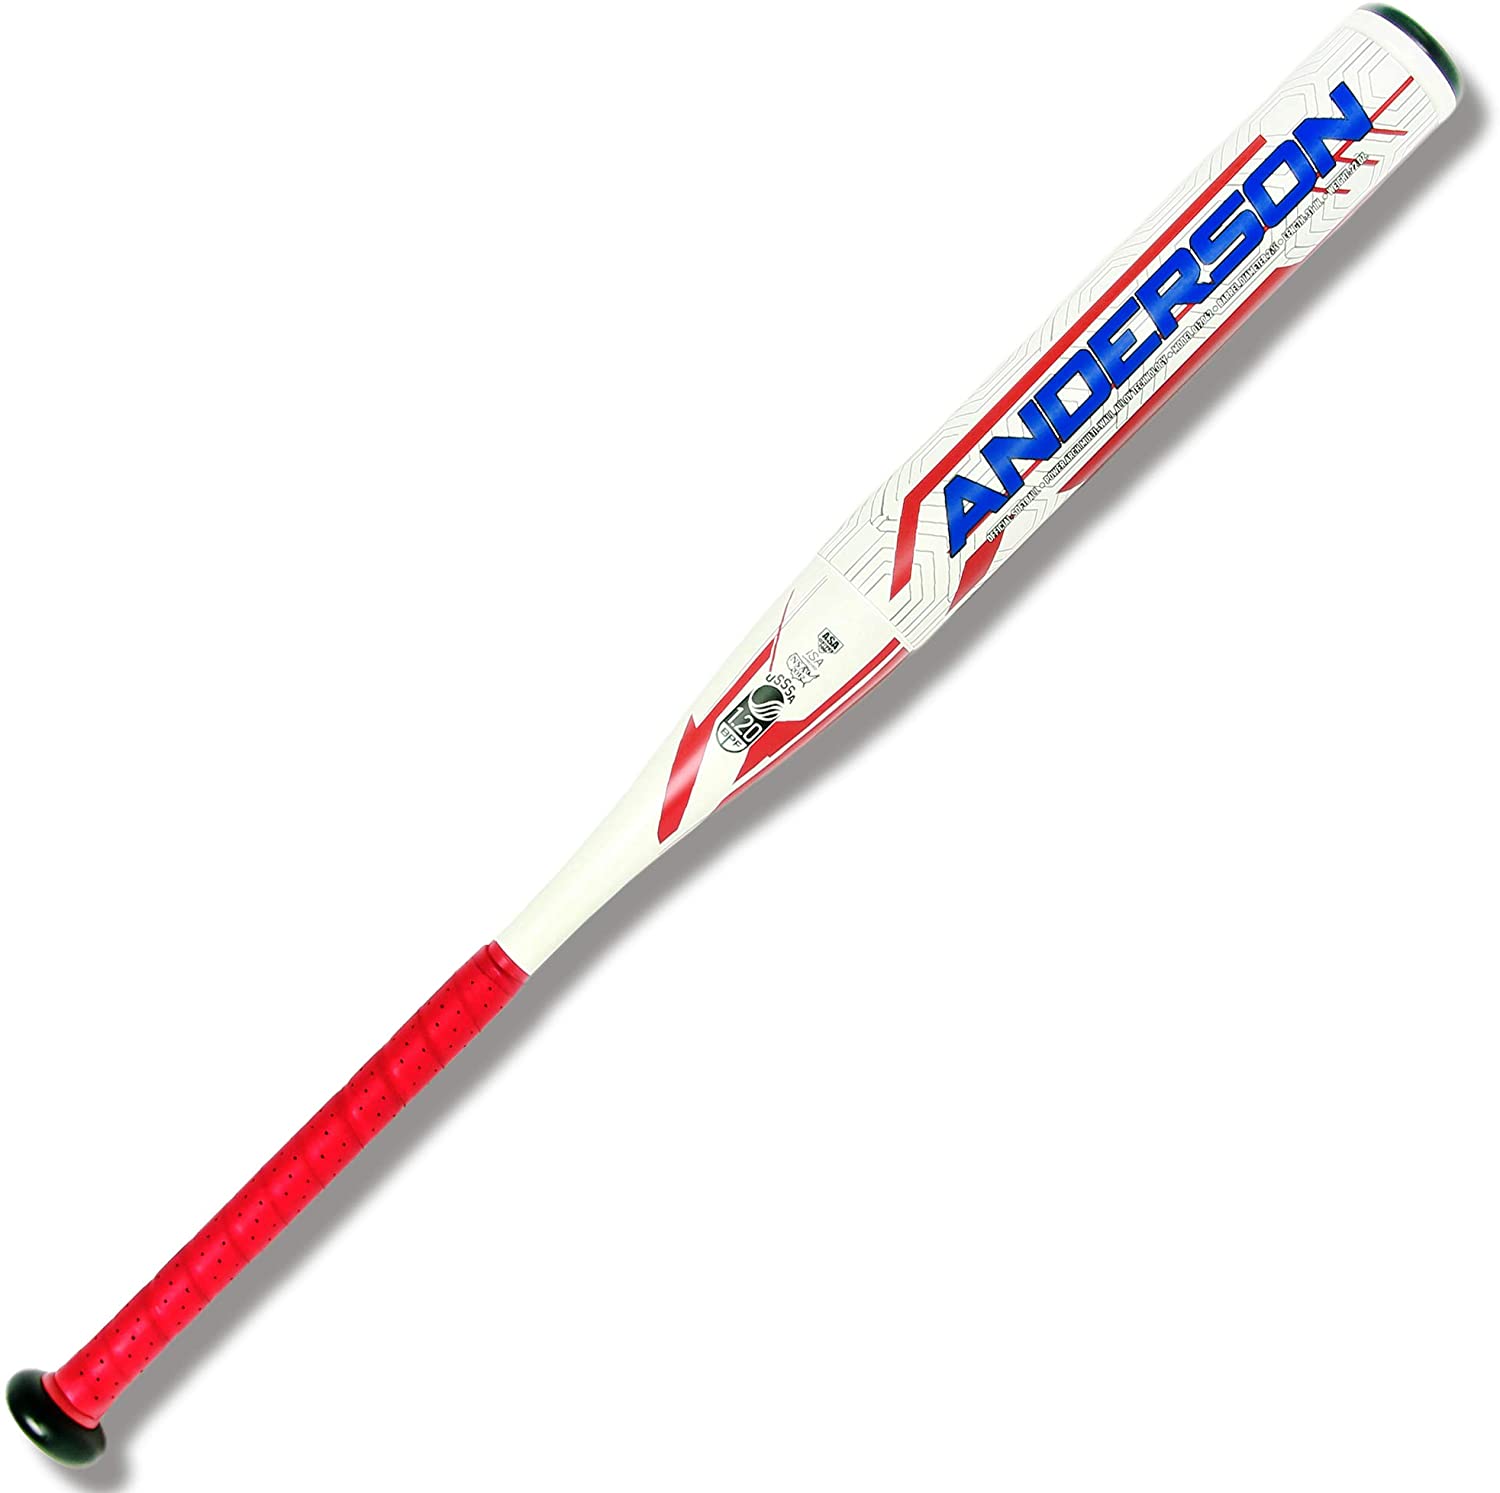 New Anderson Rocketech 2020 -9 Double-Wall Fastpitch Softball Bat